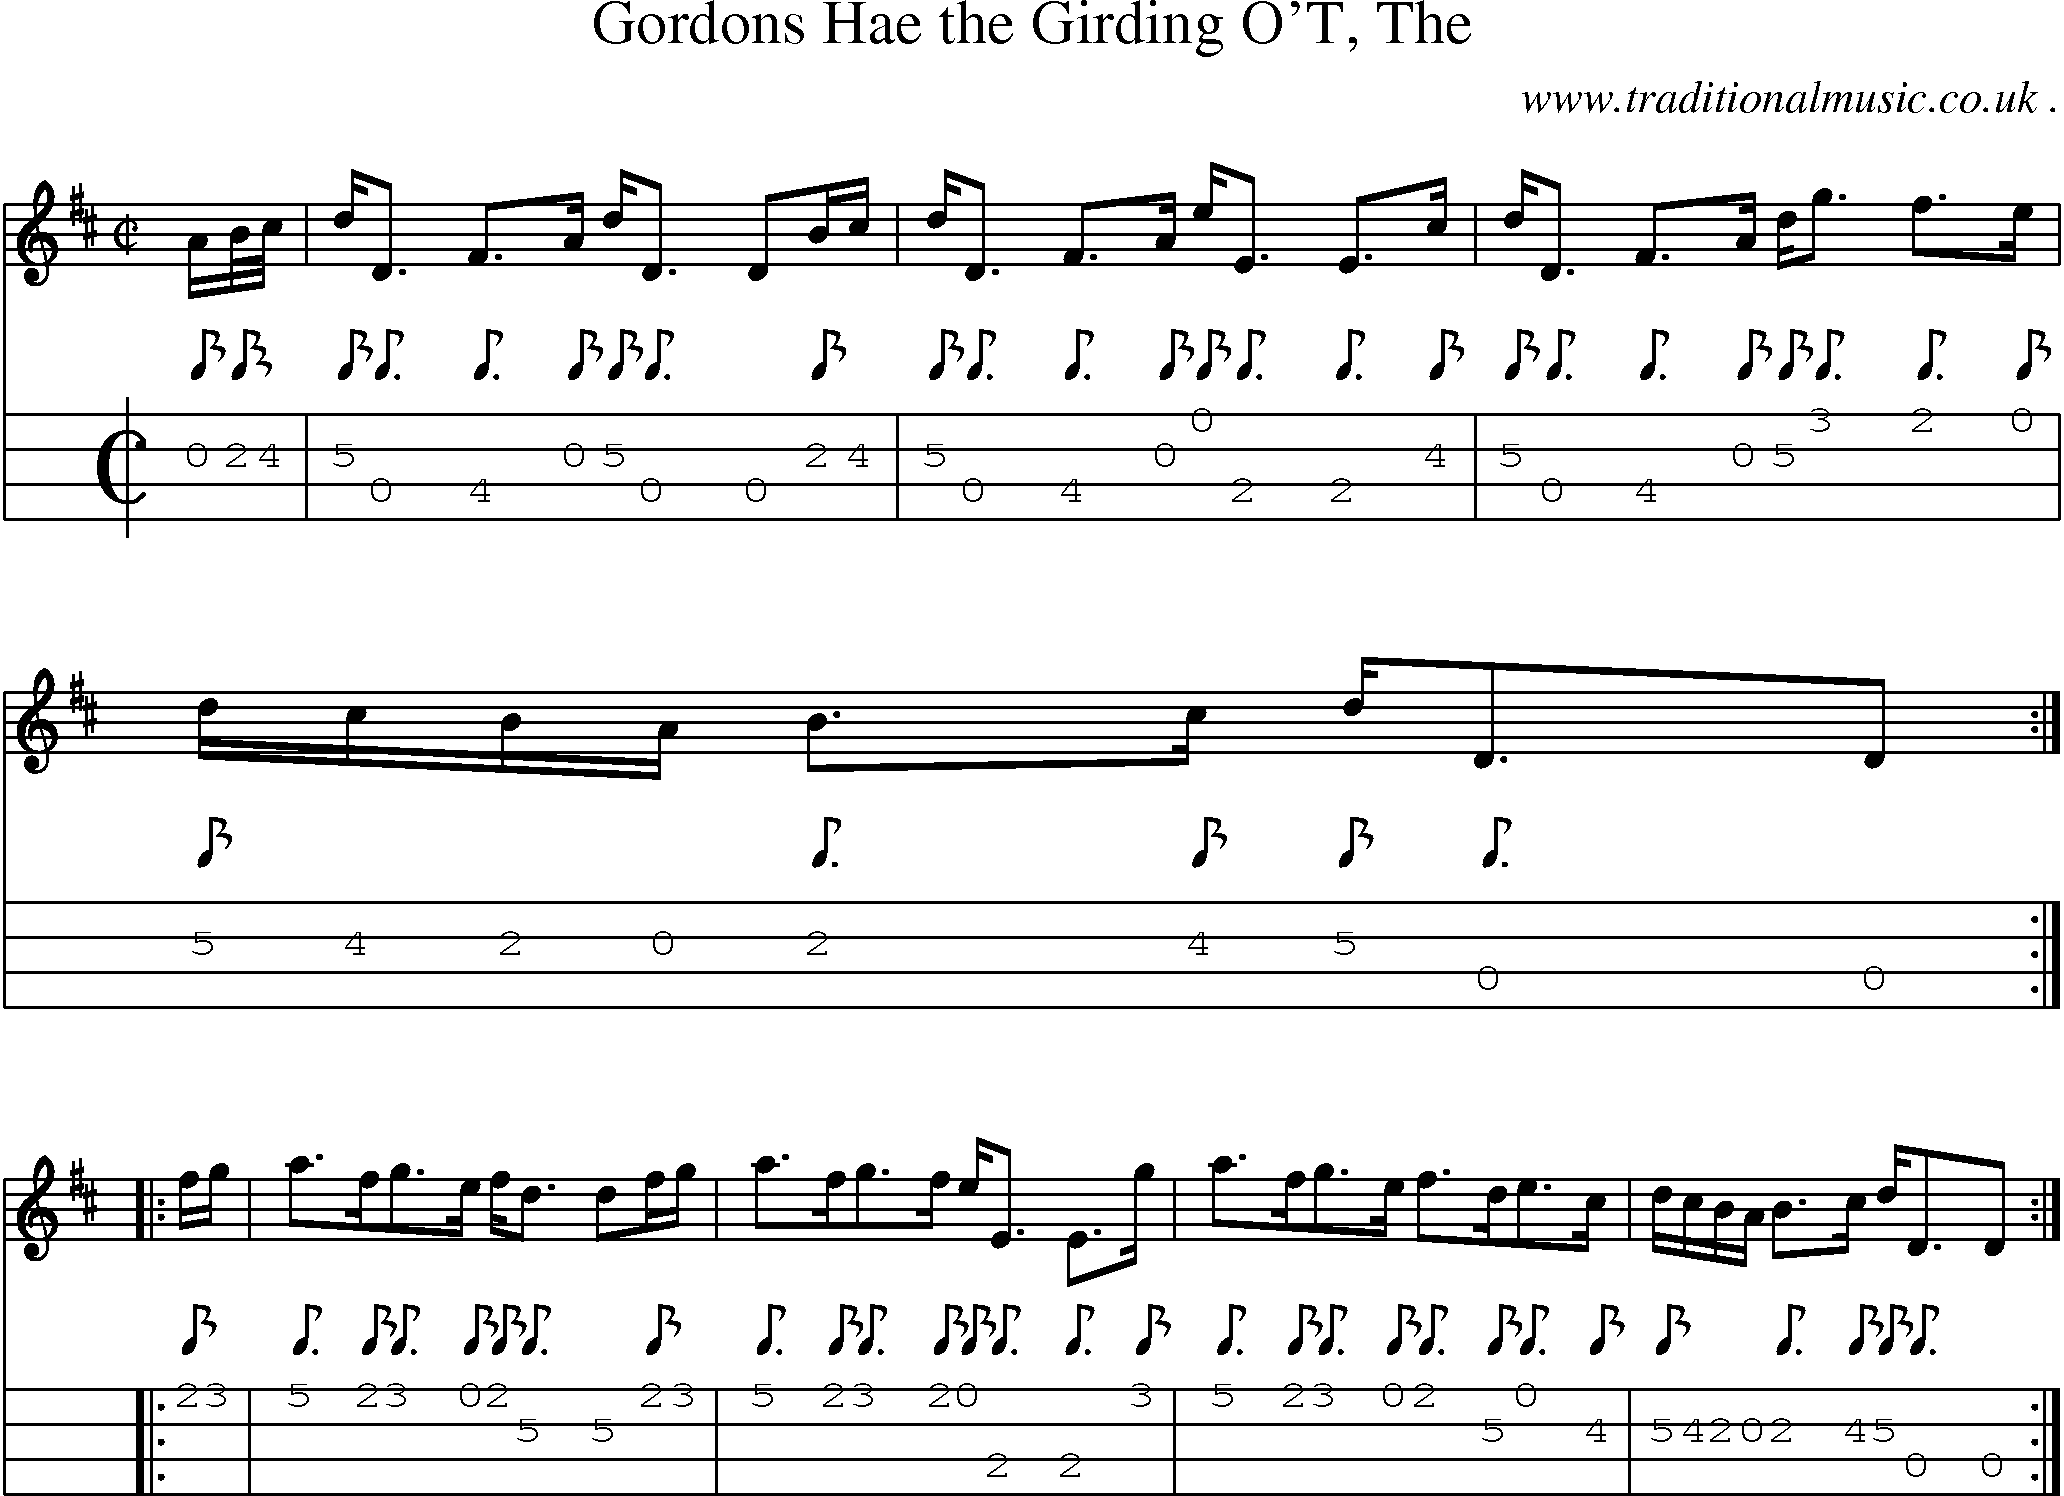 Sheet-music  score, Chords and Mandolin Tabs for Gordons Hae The Girding Ot The